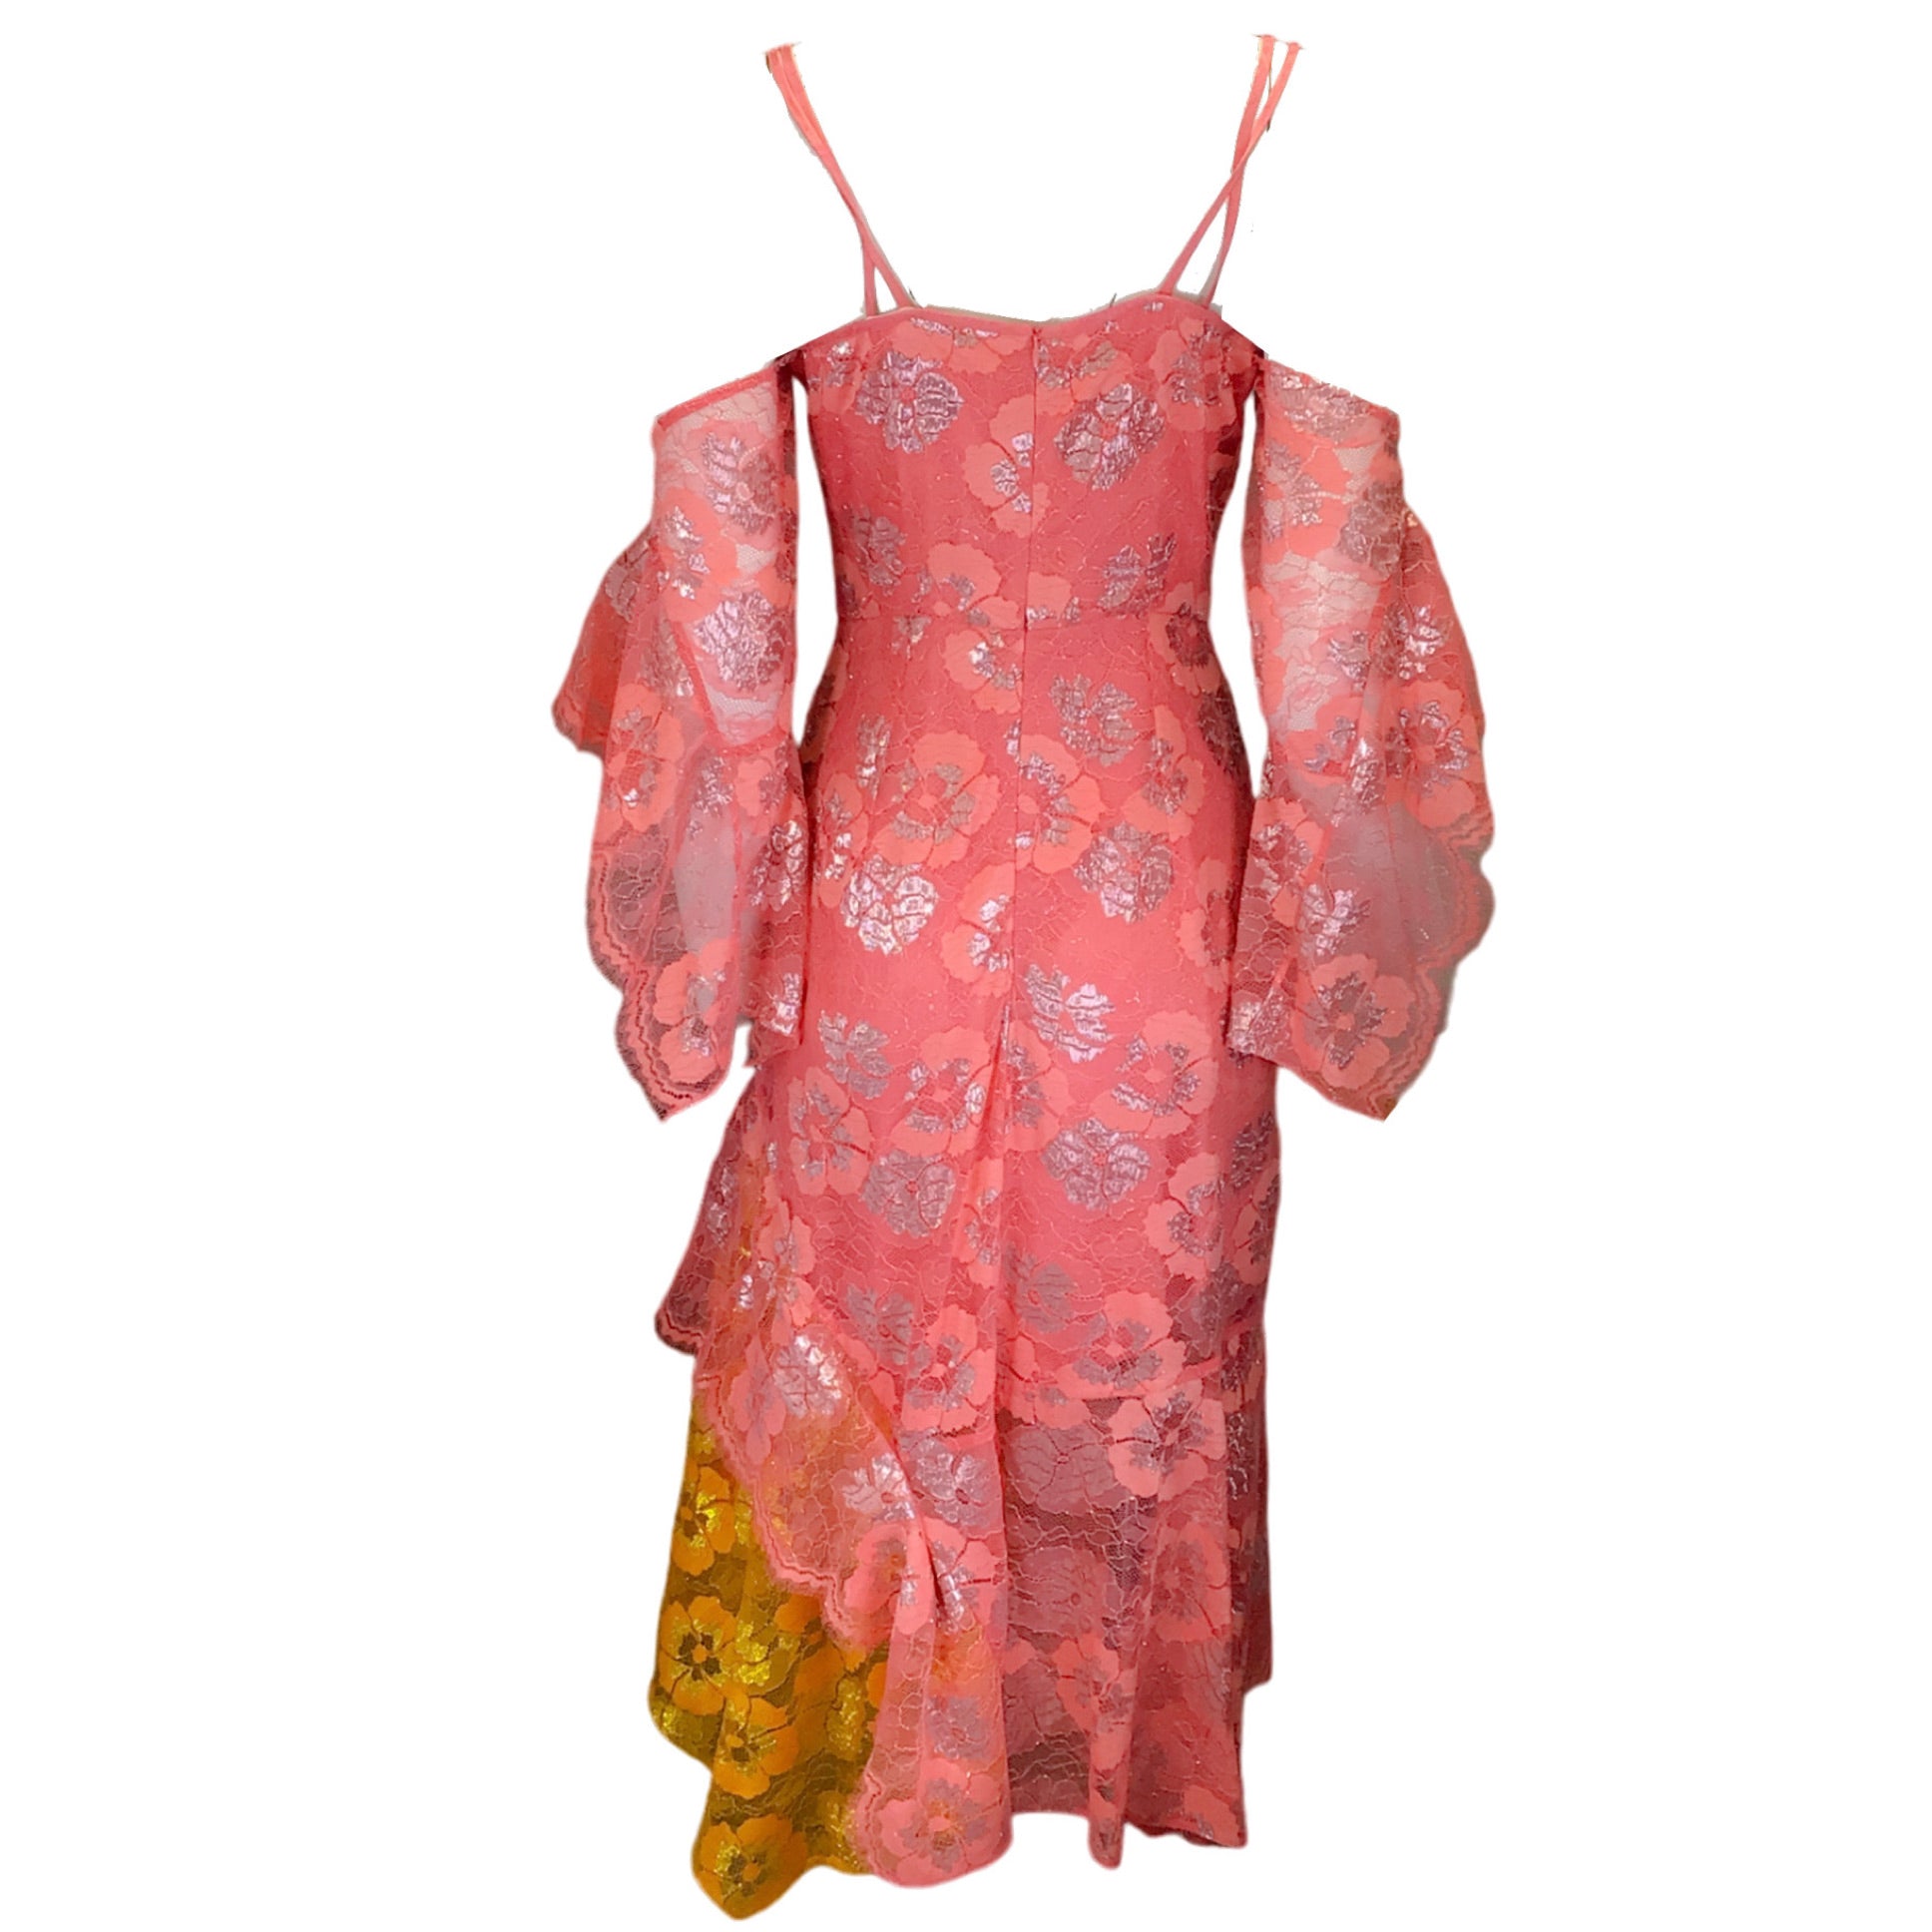 Peter Pilotto Coral Metallic Lace Midi Dress